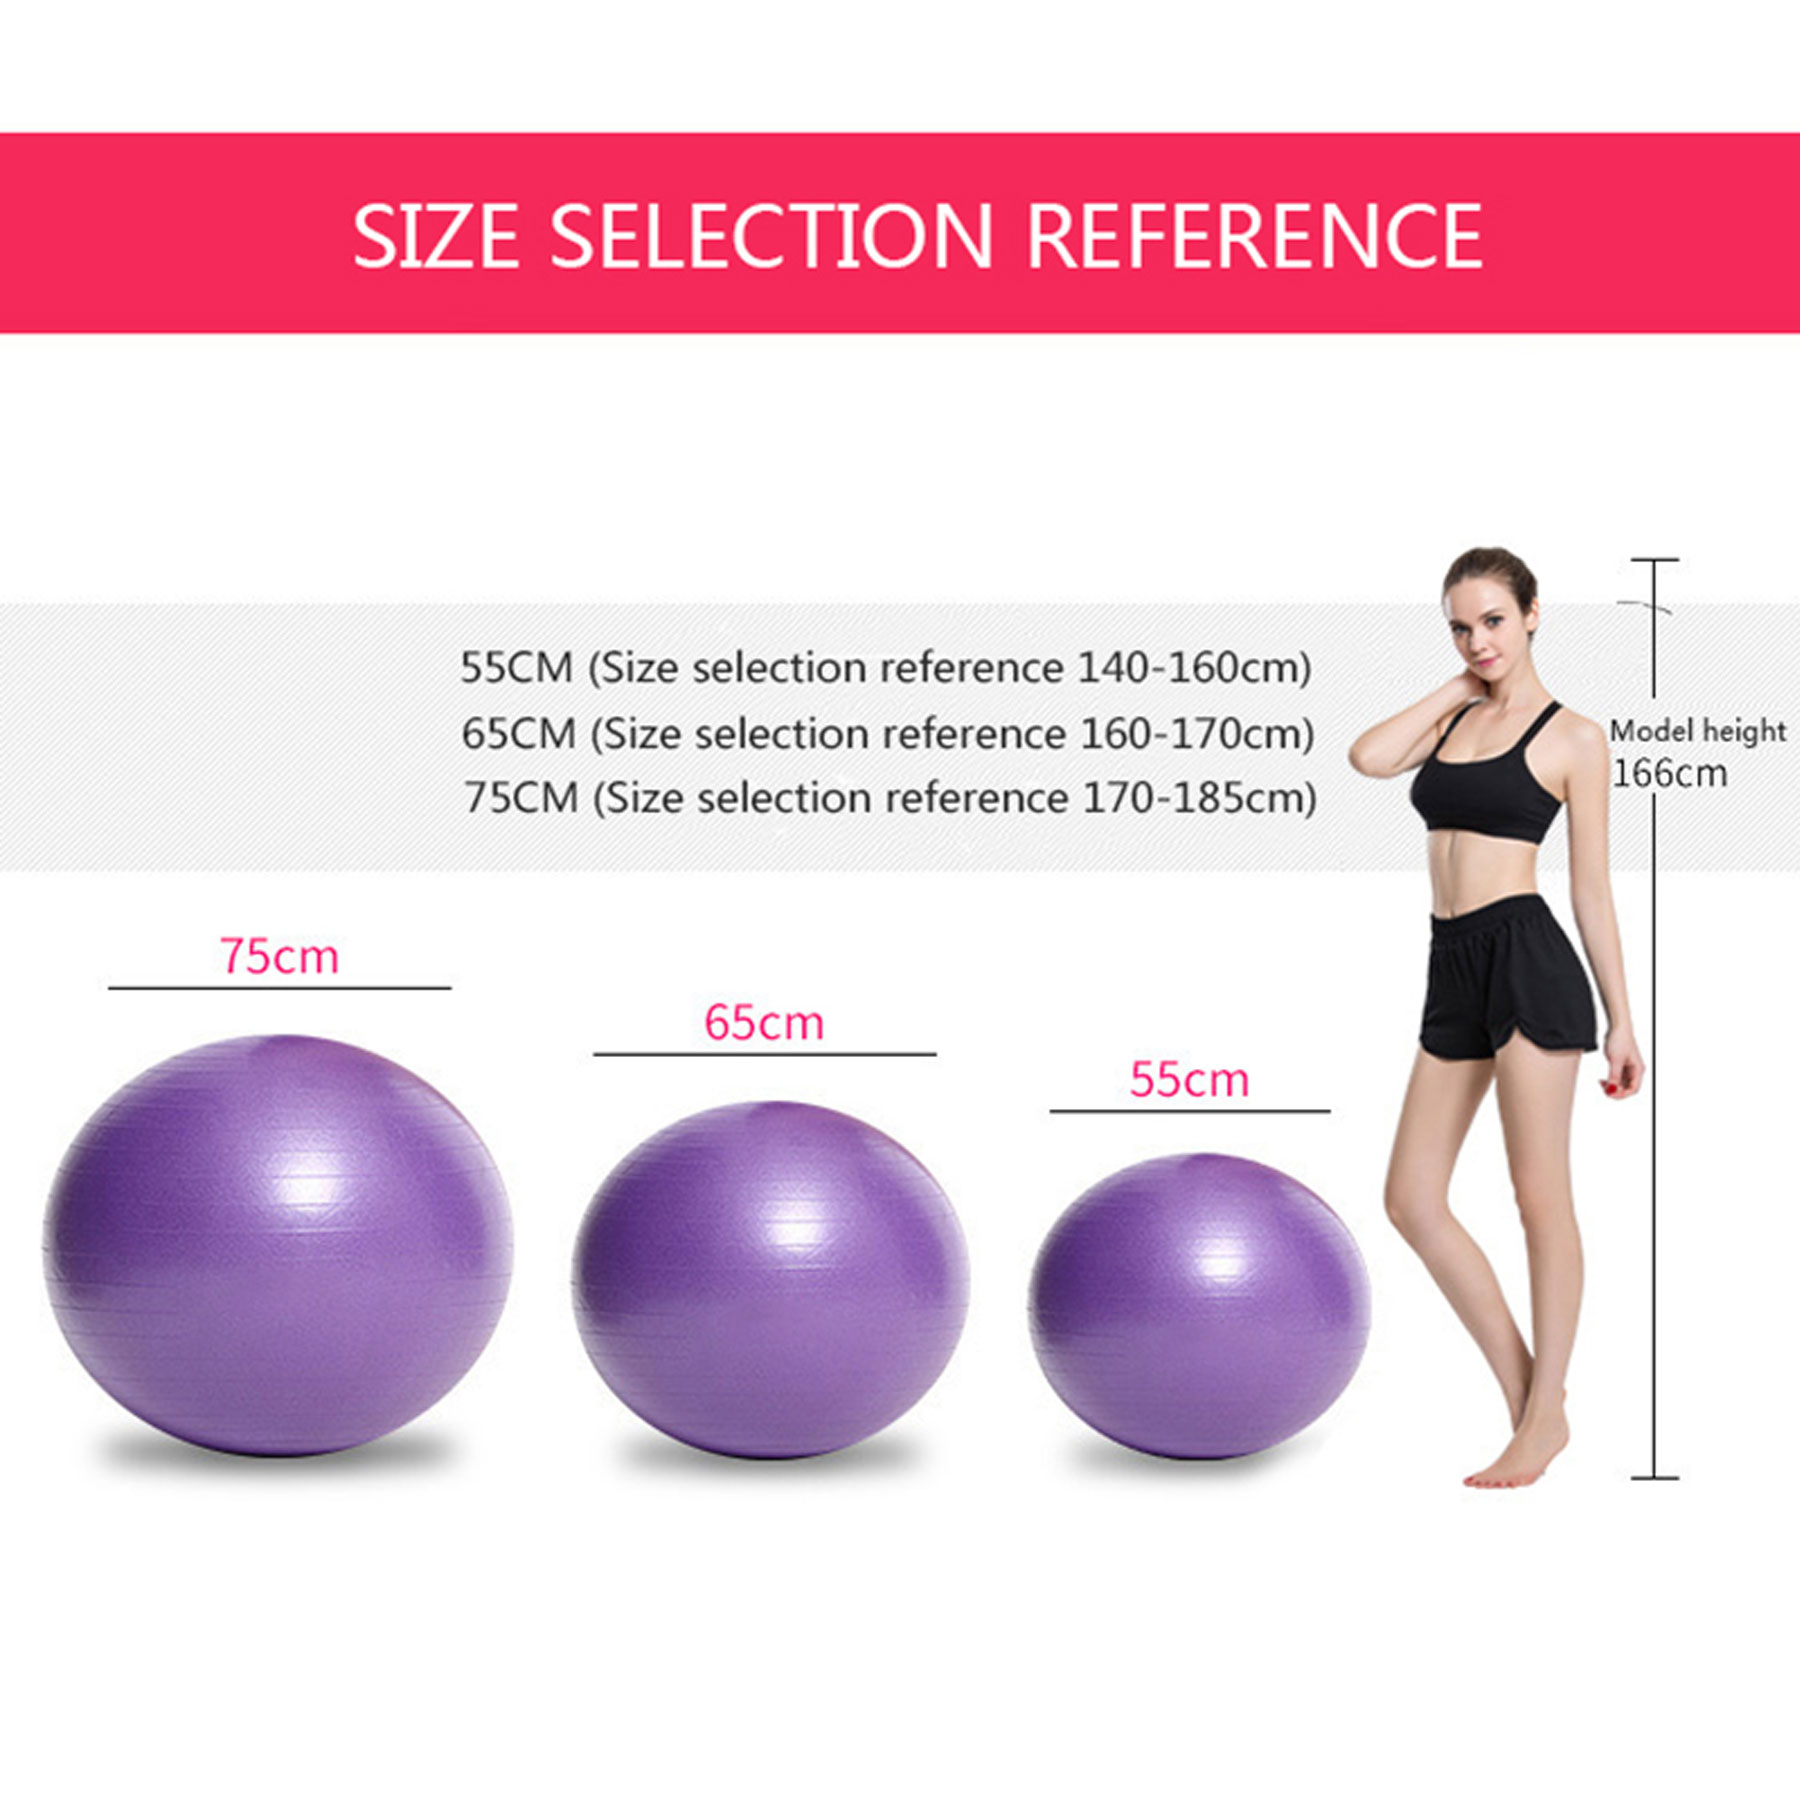 65cm exercise ball height